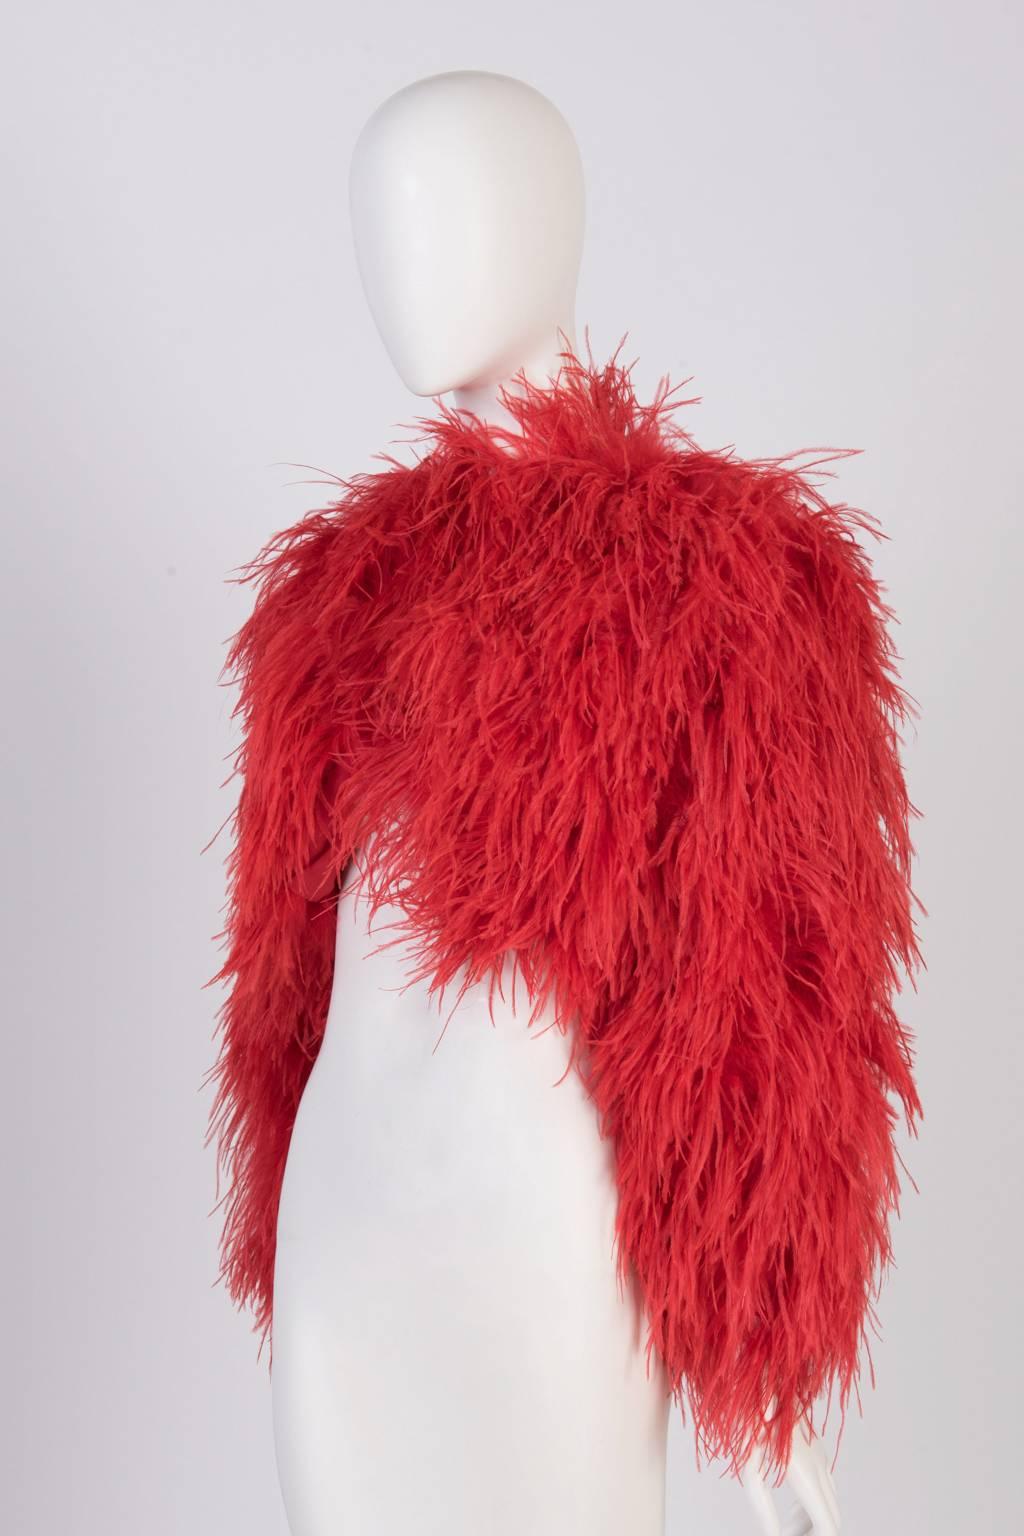 Ostrich feather bolero in striking bright red.